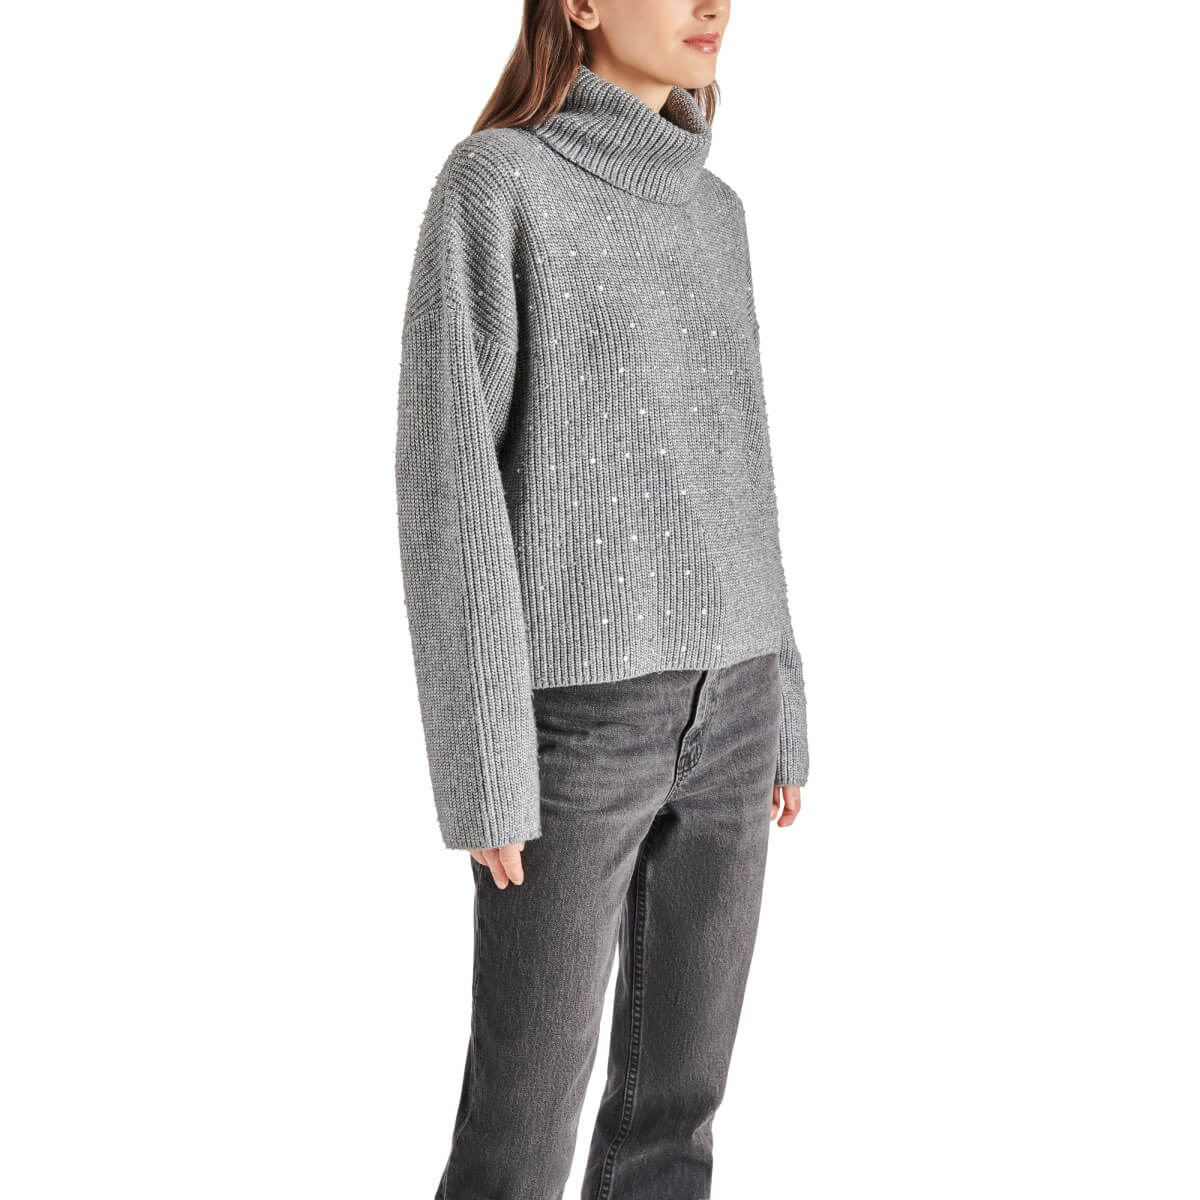 Steve Madden Astro Sequin Turtle Neck Sweater grey side | MILK MONEY milkmoney.co | cute sweaters for women, cute knit sweaters, cute pullover sweaters